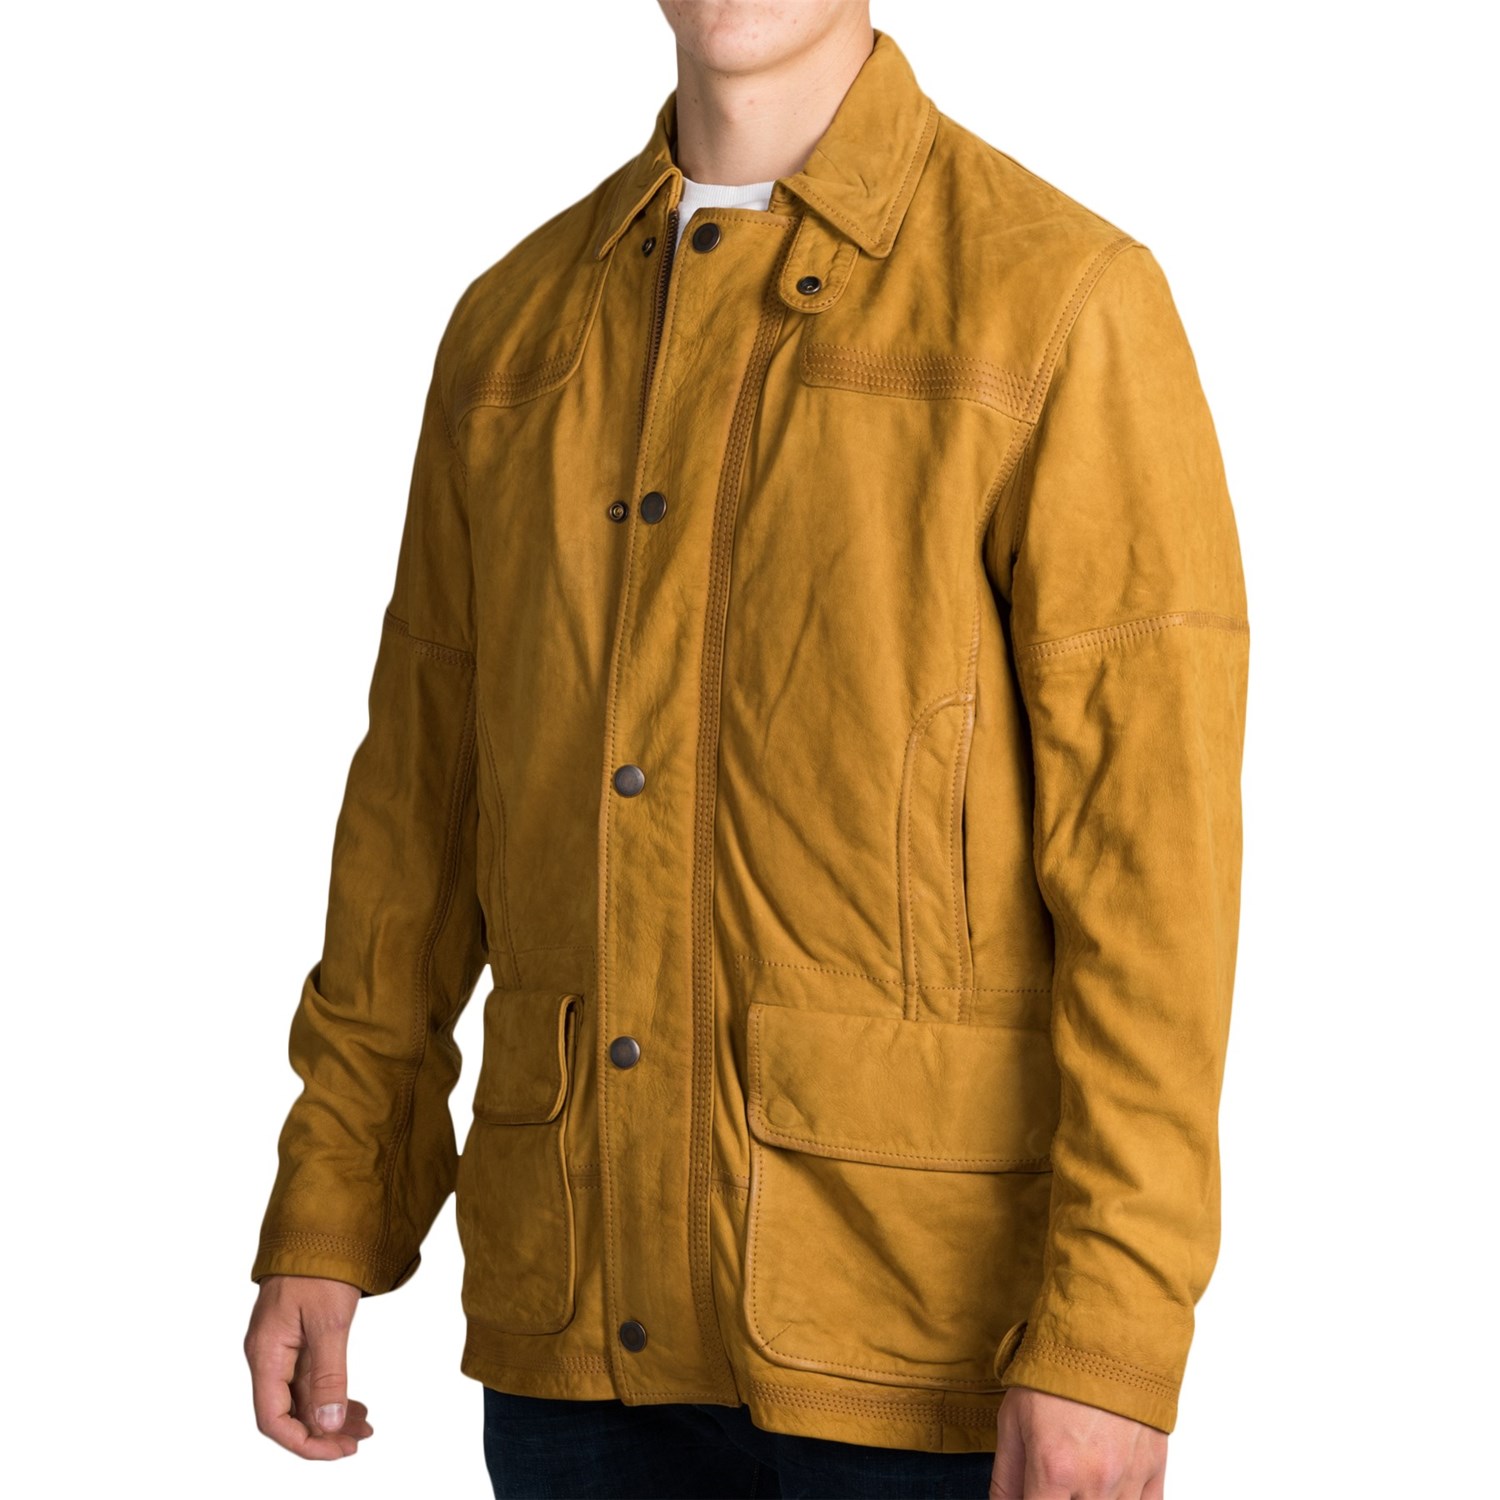 Timberland Mount Lincoln Leather Barn Jacket For Men 9650k 69 On Popscreen